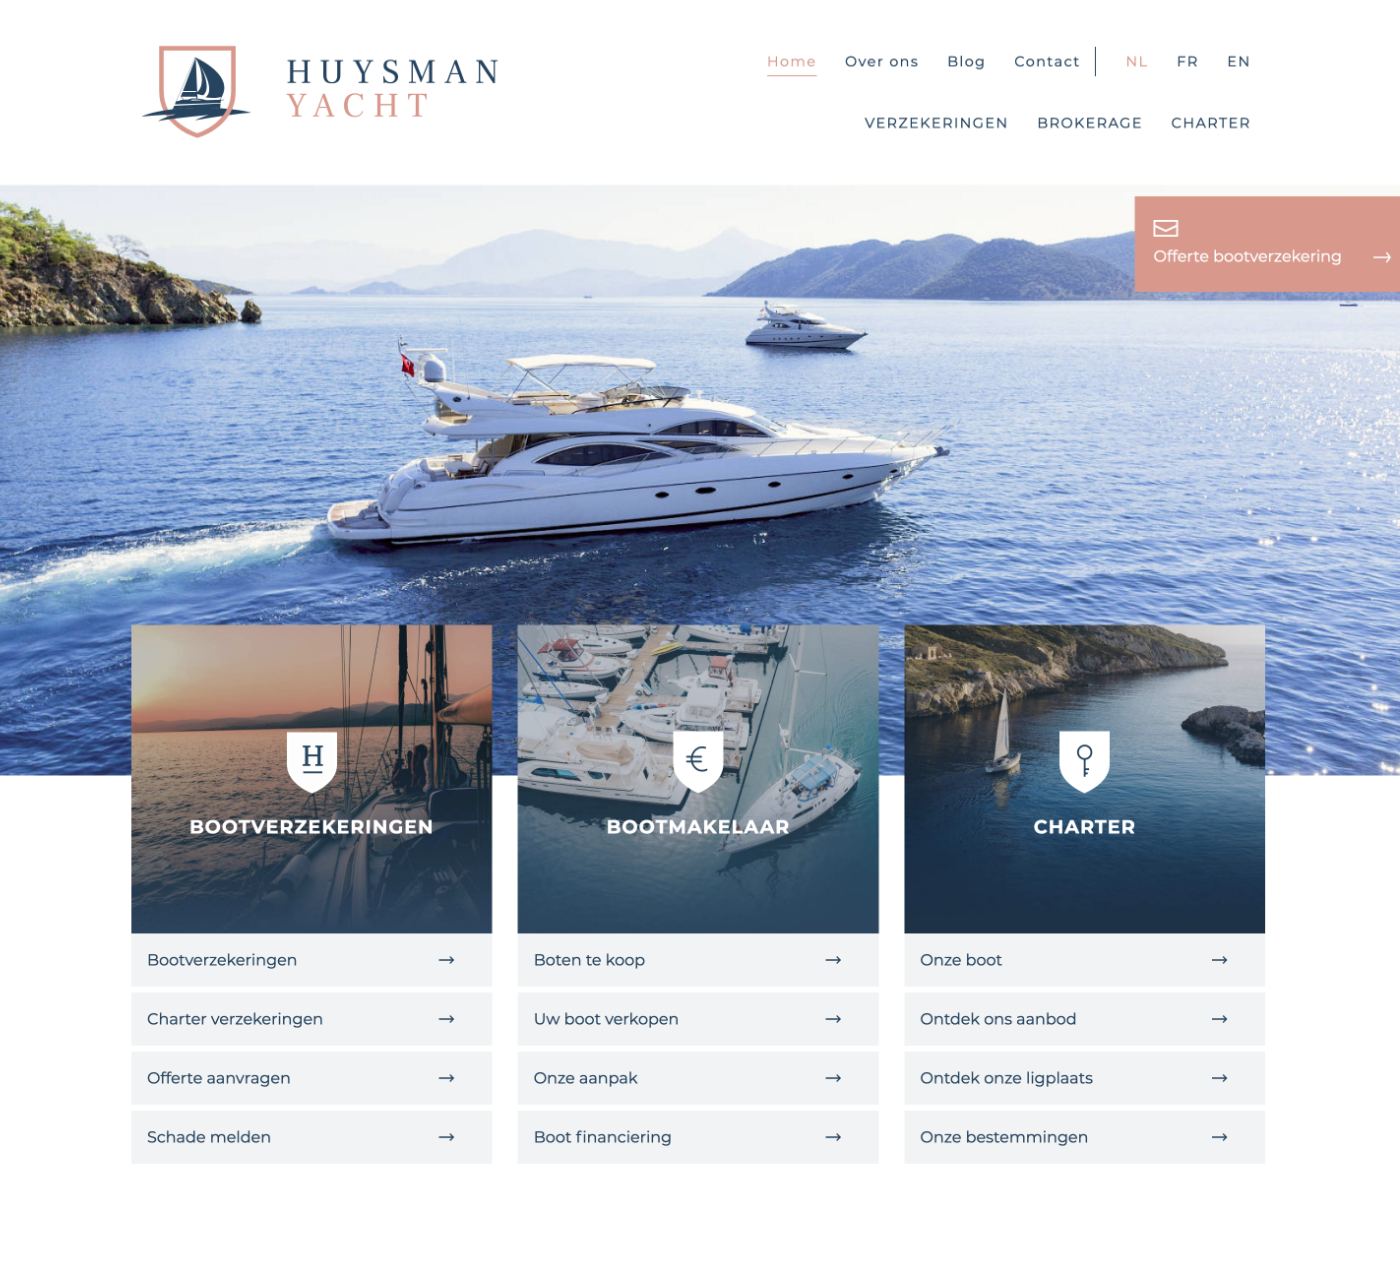 Huysman Yacht